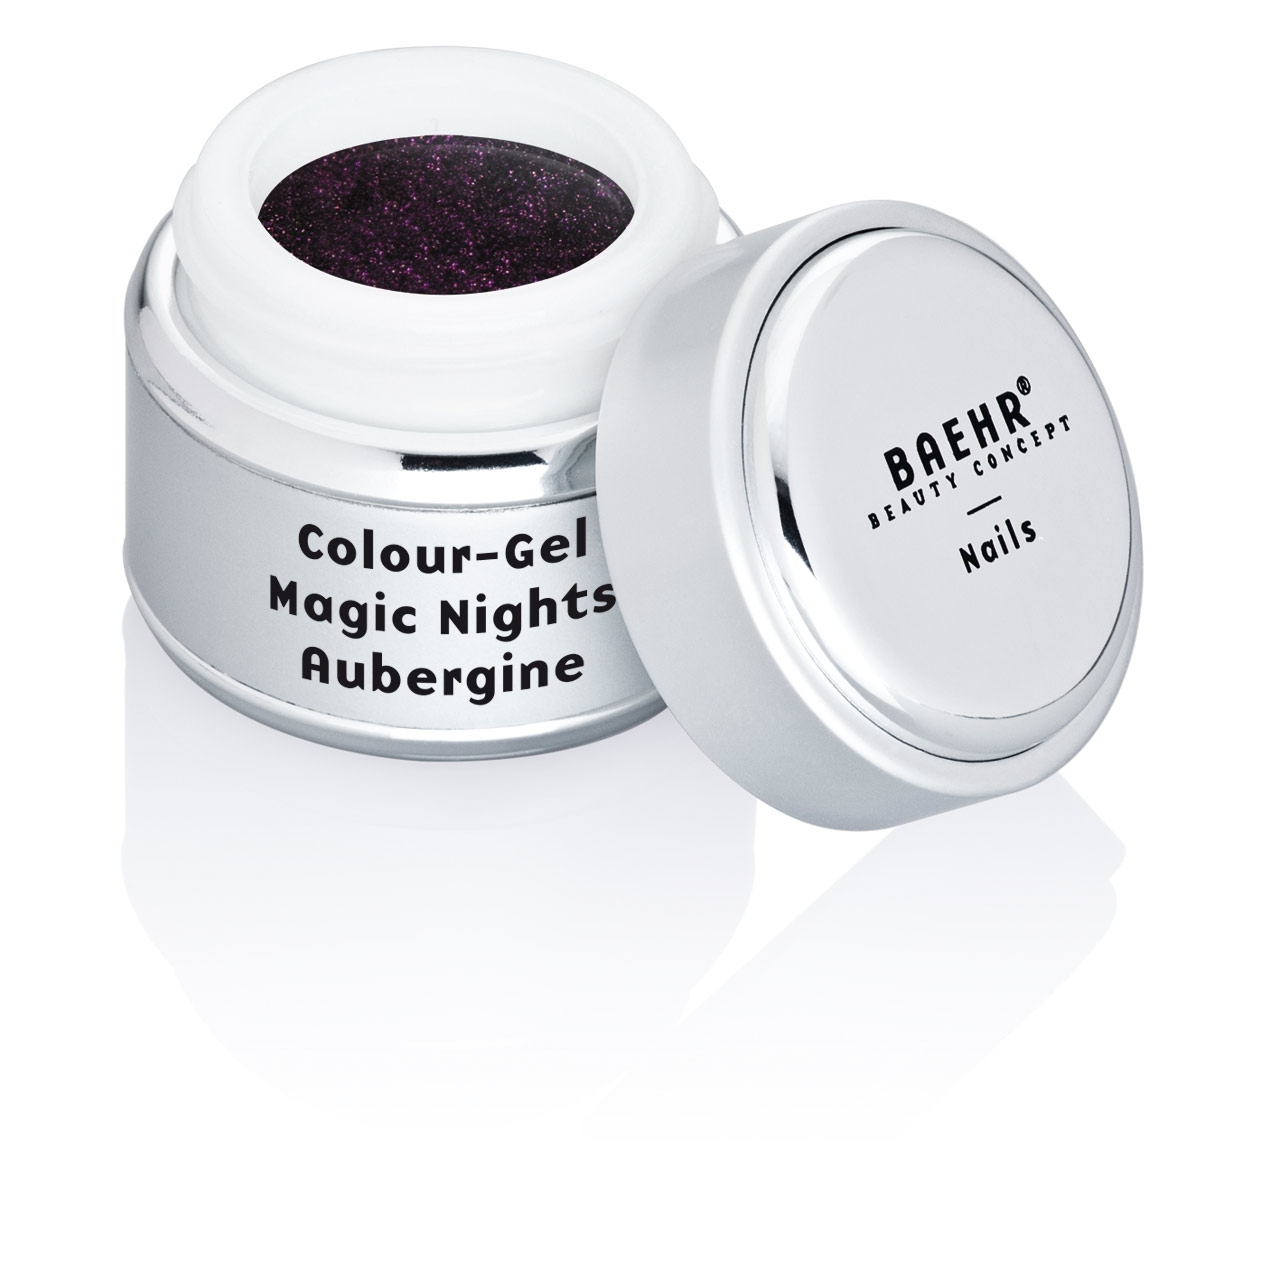 BAEHR BEAUTY CONCEPT - NAILS Colour-Gel Magic Nights Aubergine 5 ml